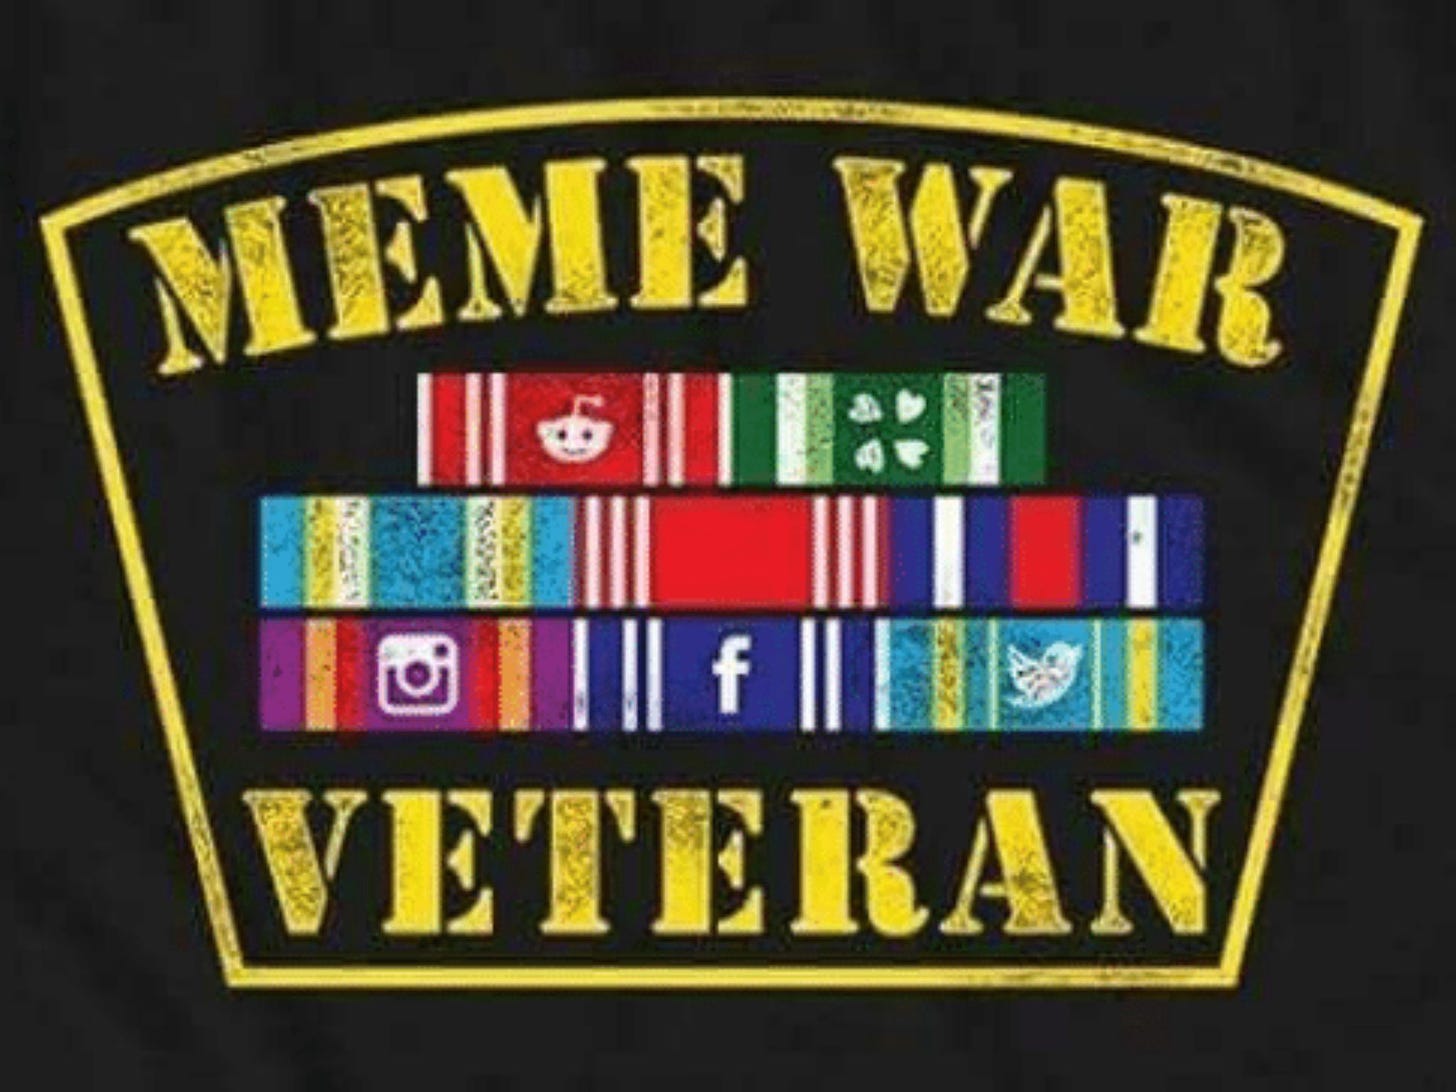 Download Meme War Veteran | PNG & GIF BASE